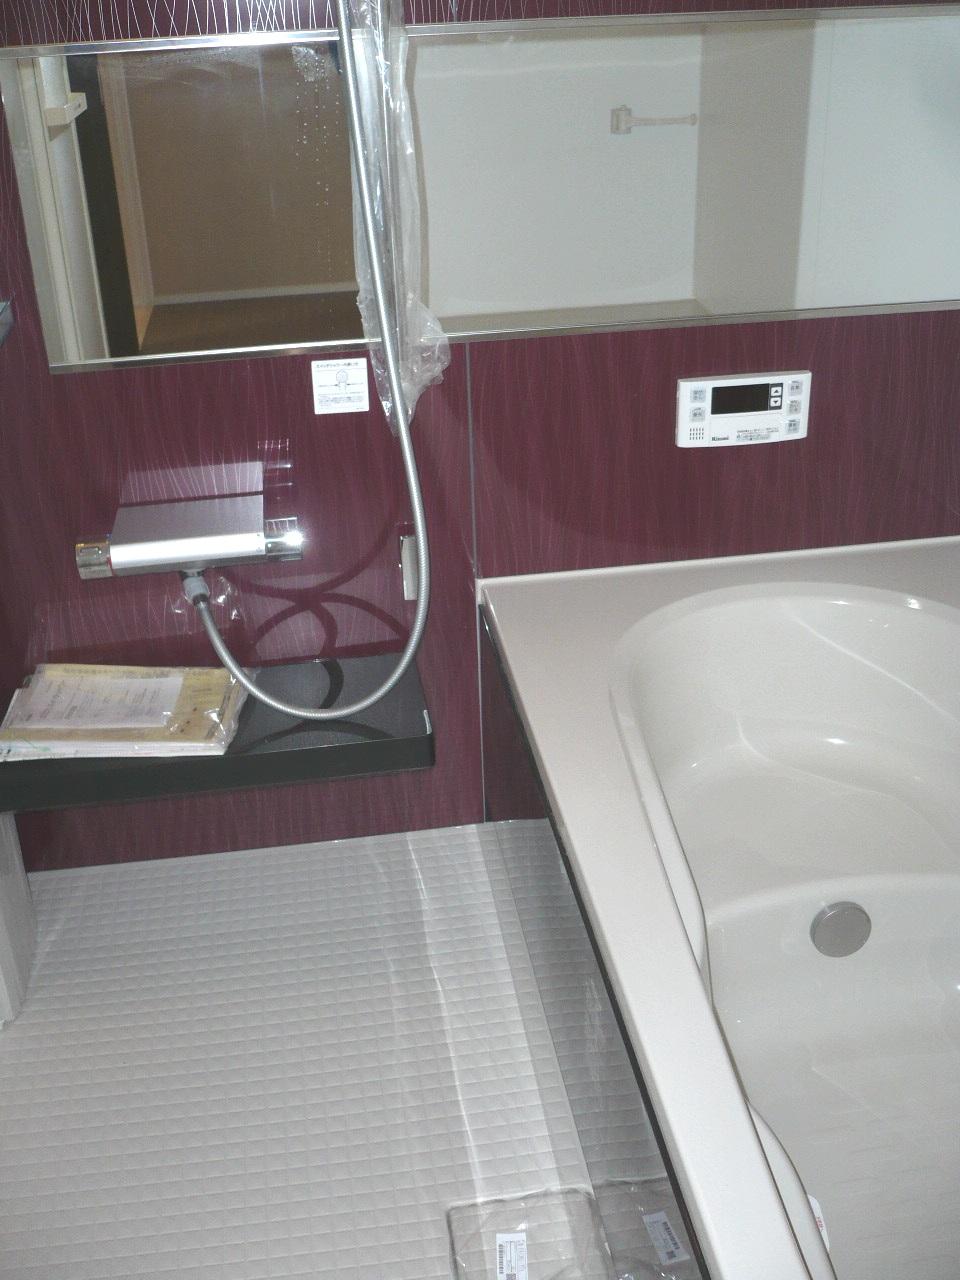 Bathroom. Bathroom with heating dryer